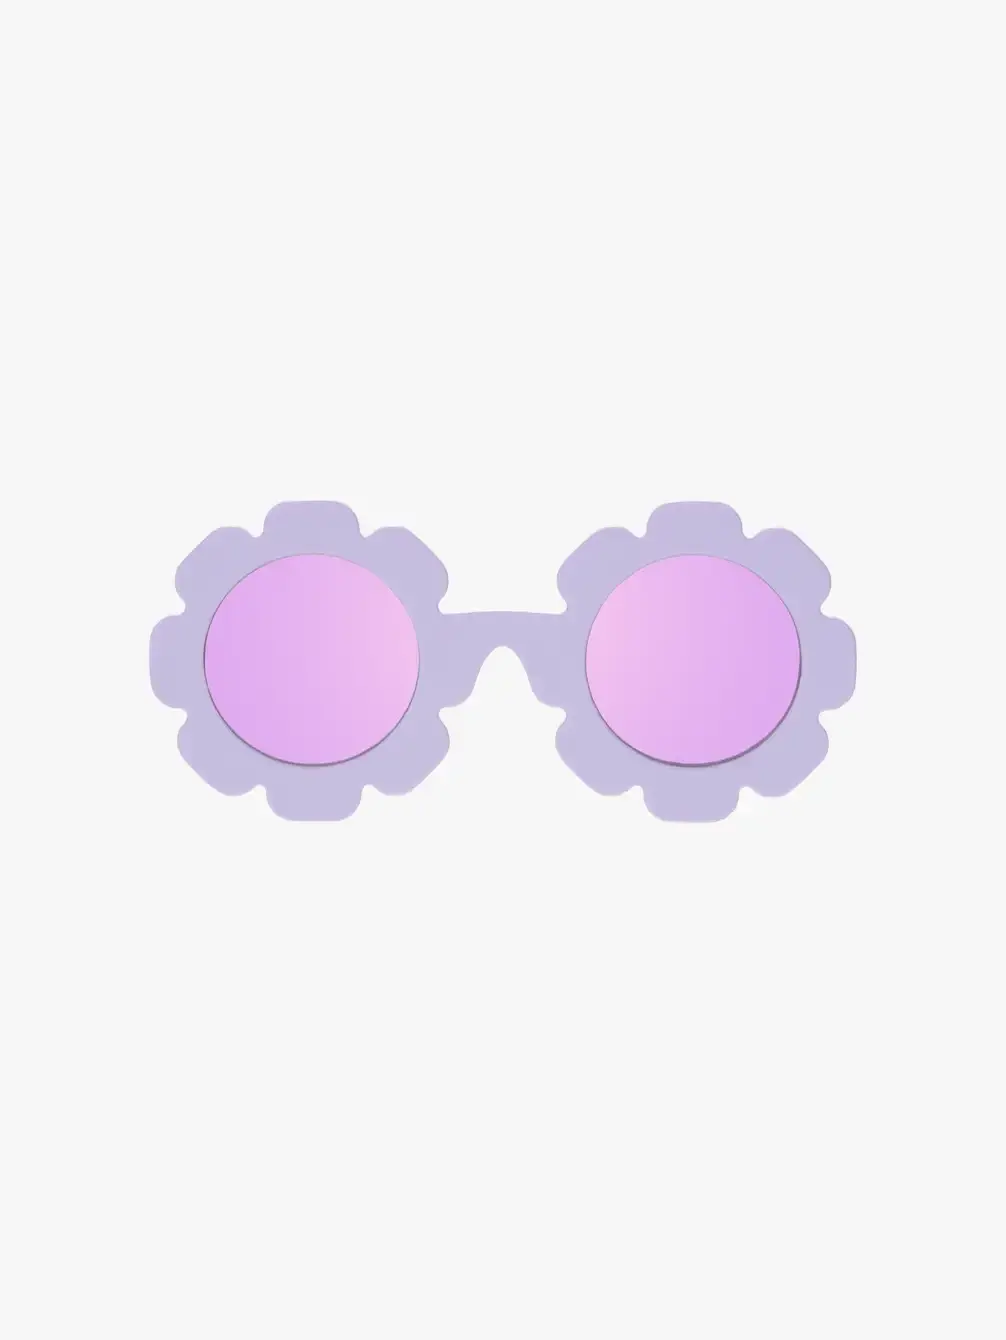 Babiators Babiators Polarized Flower Sunglasses